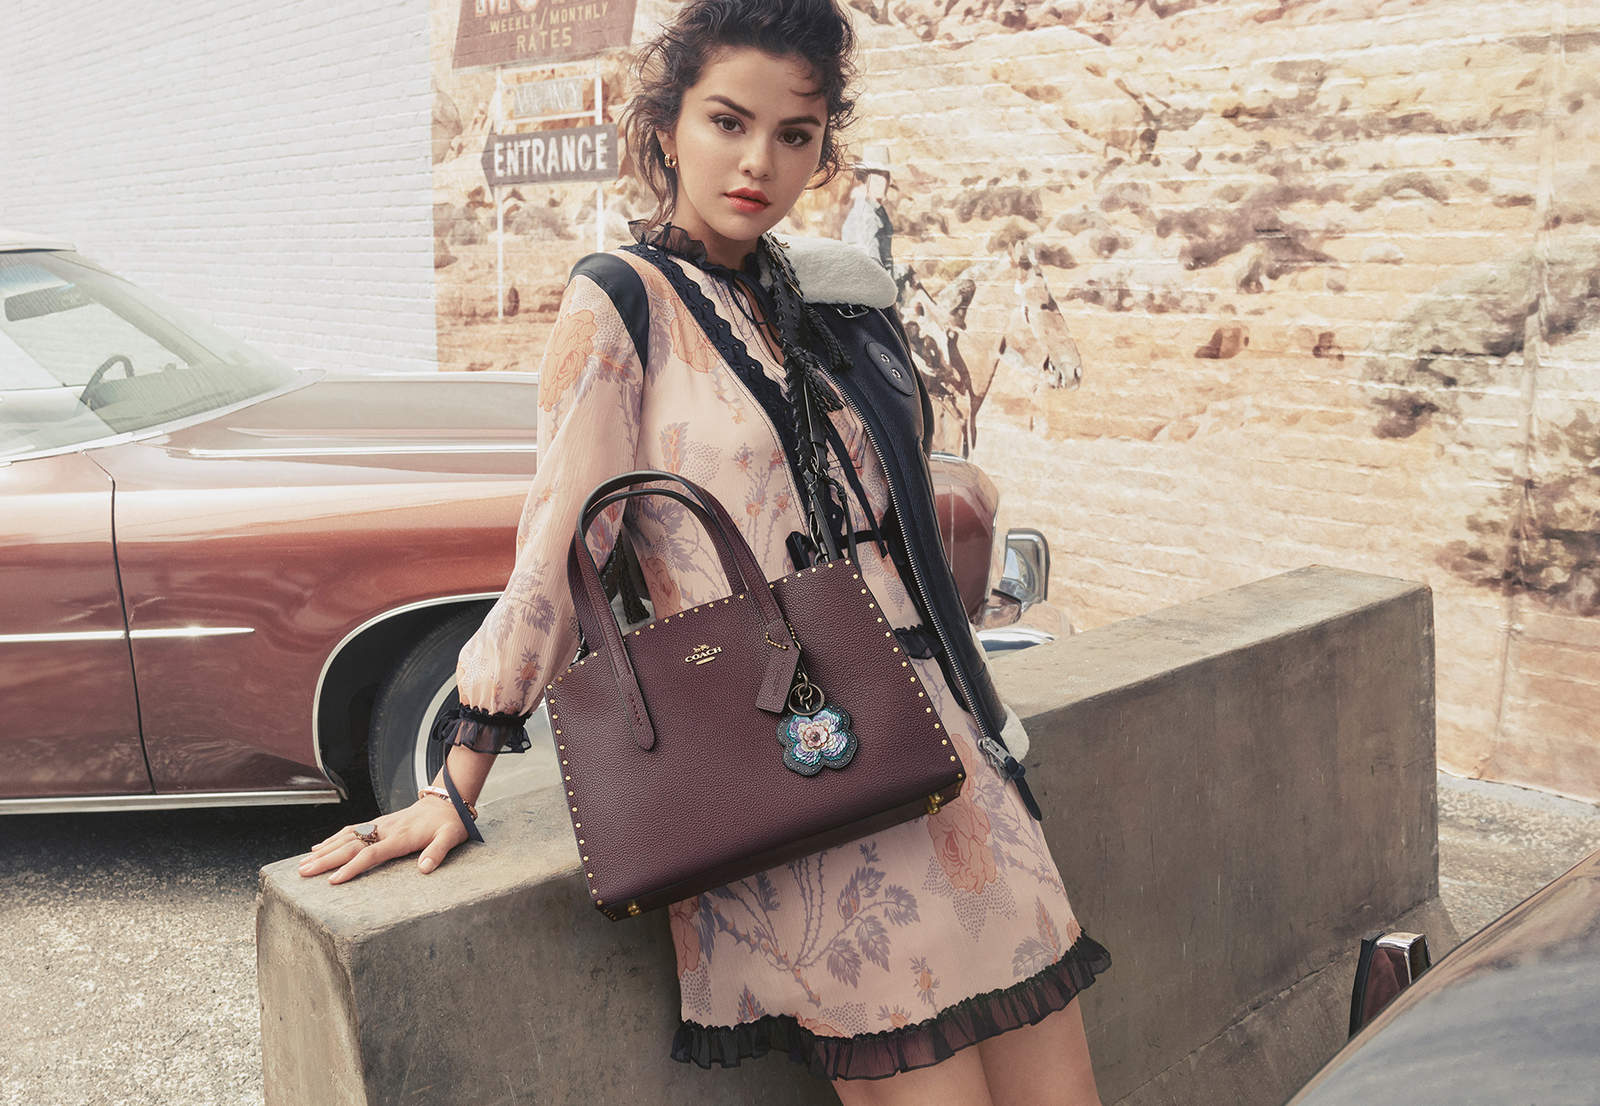 Selena Gomez Louis Vuitton LV Series 5 Ad Campaign